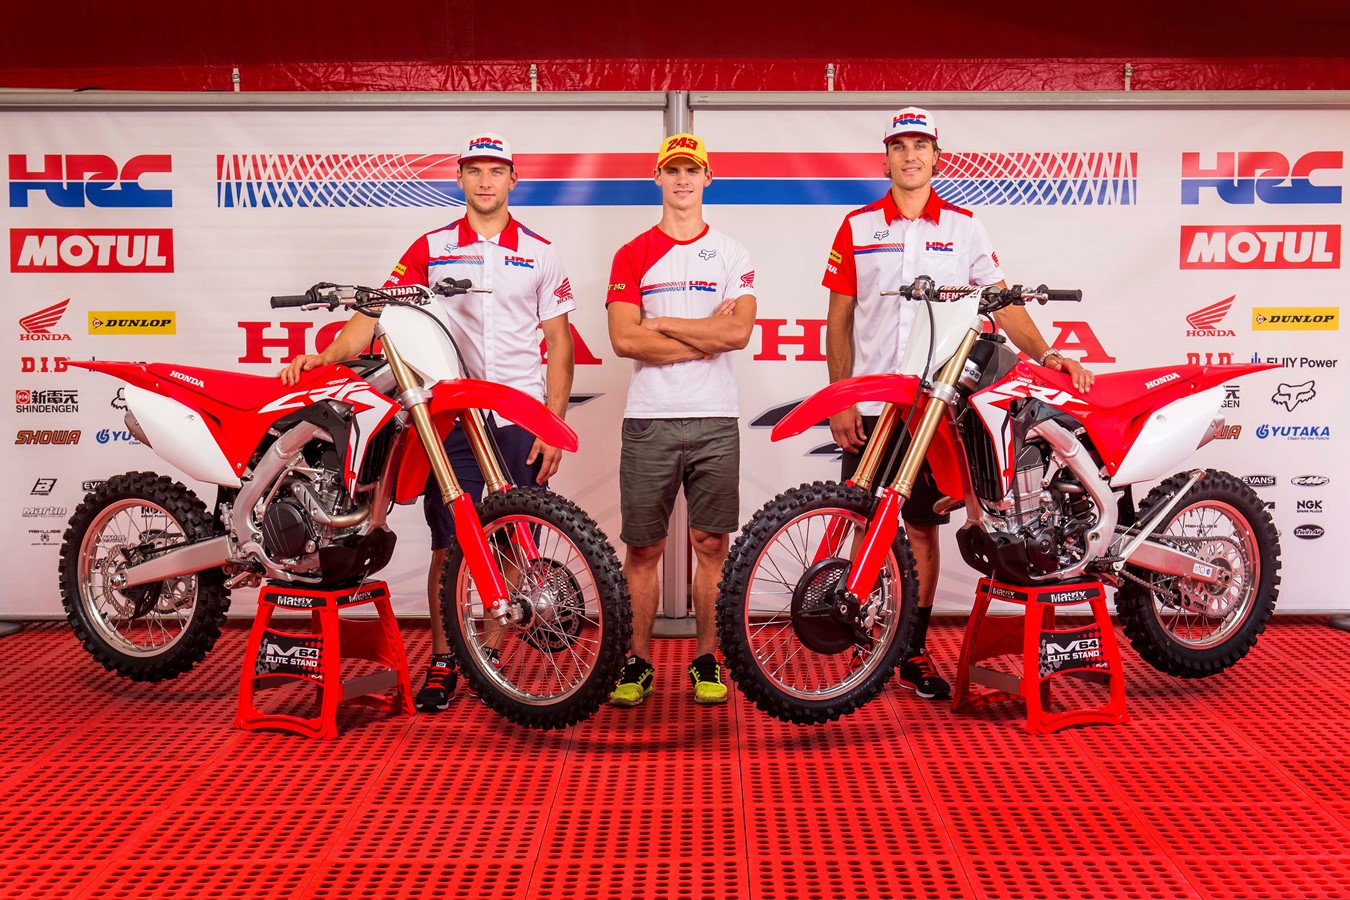 Honda’s factory teams unveil 2017 Honda CRFs at MXGP of The Netherlands